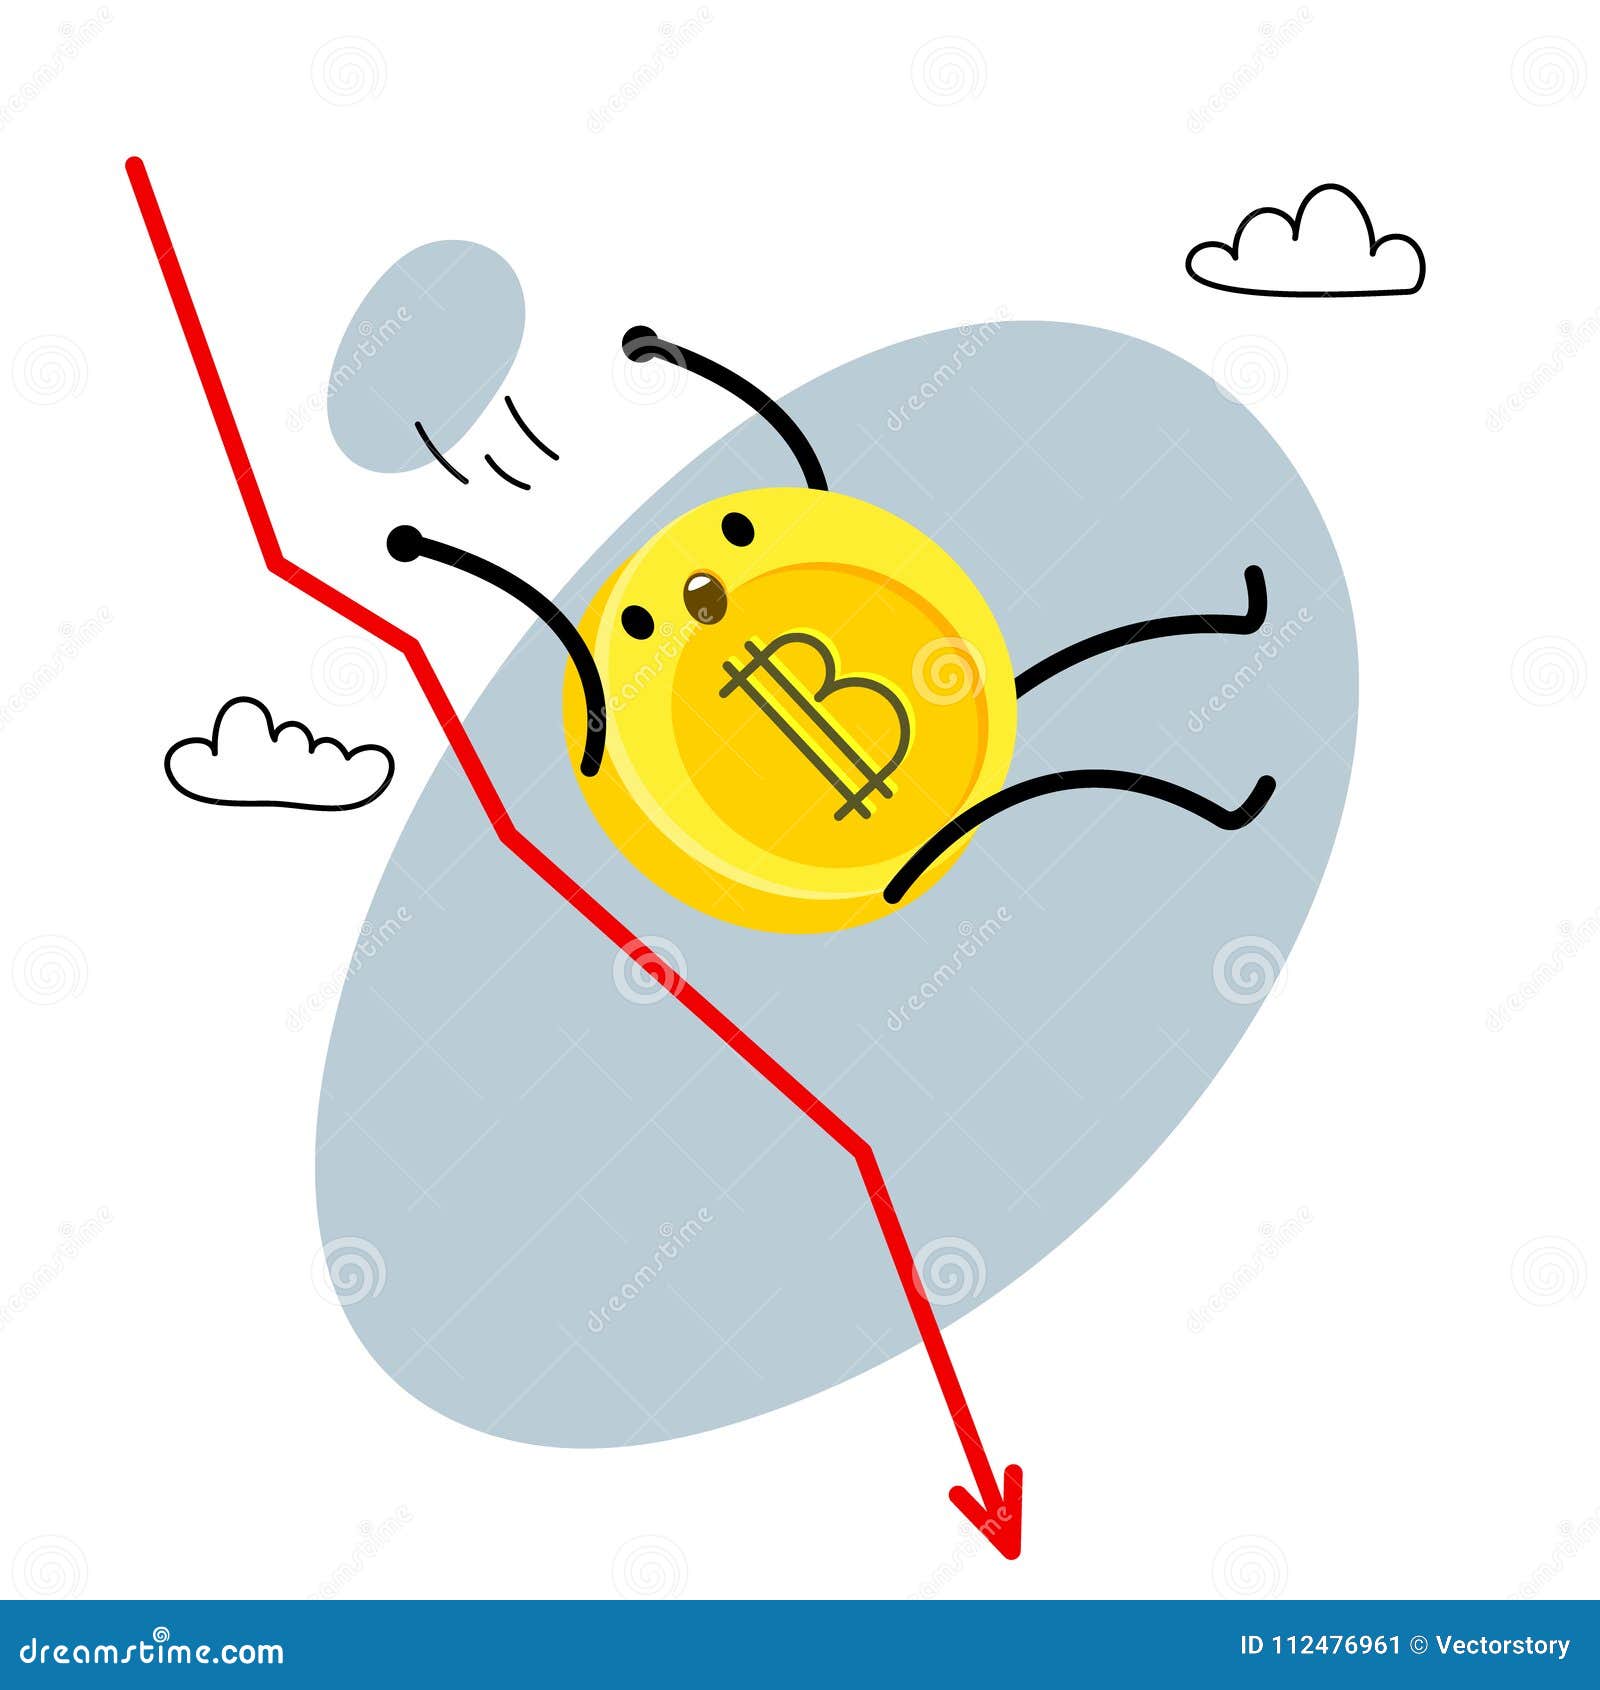 Cartoon bitcoin character. stock vector. Illustration of character